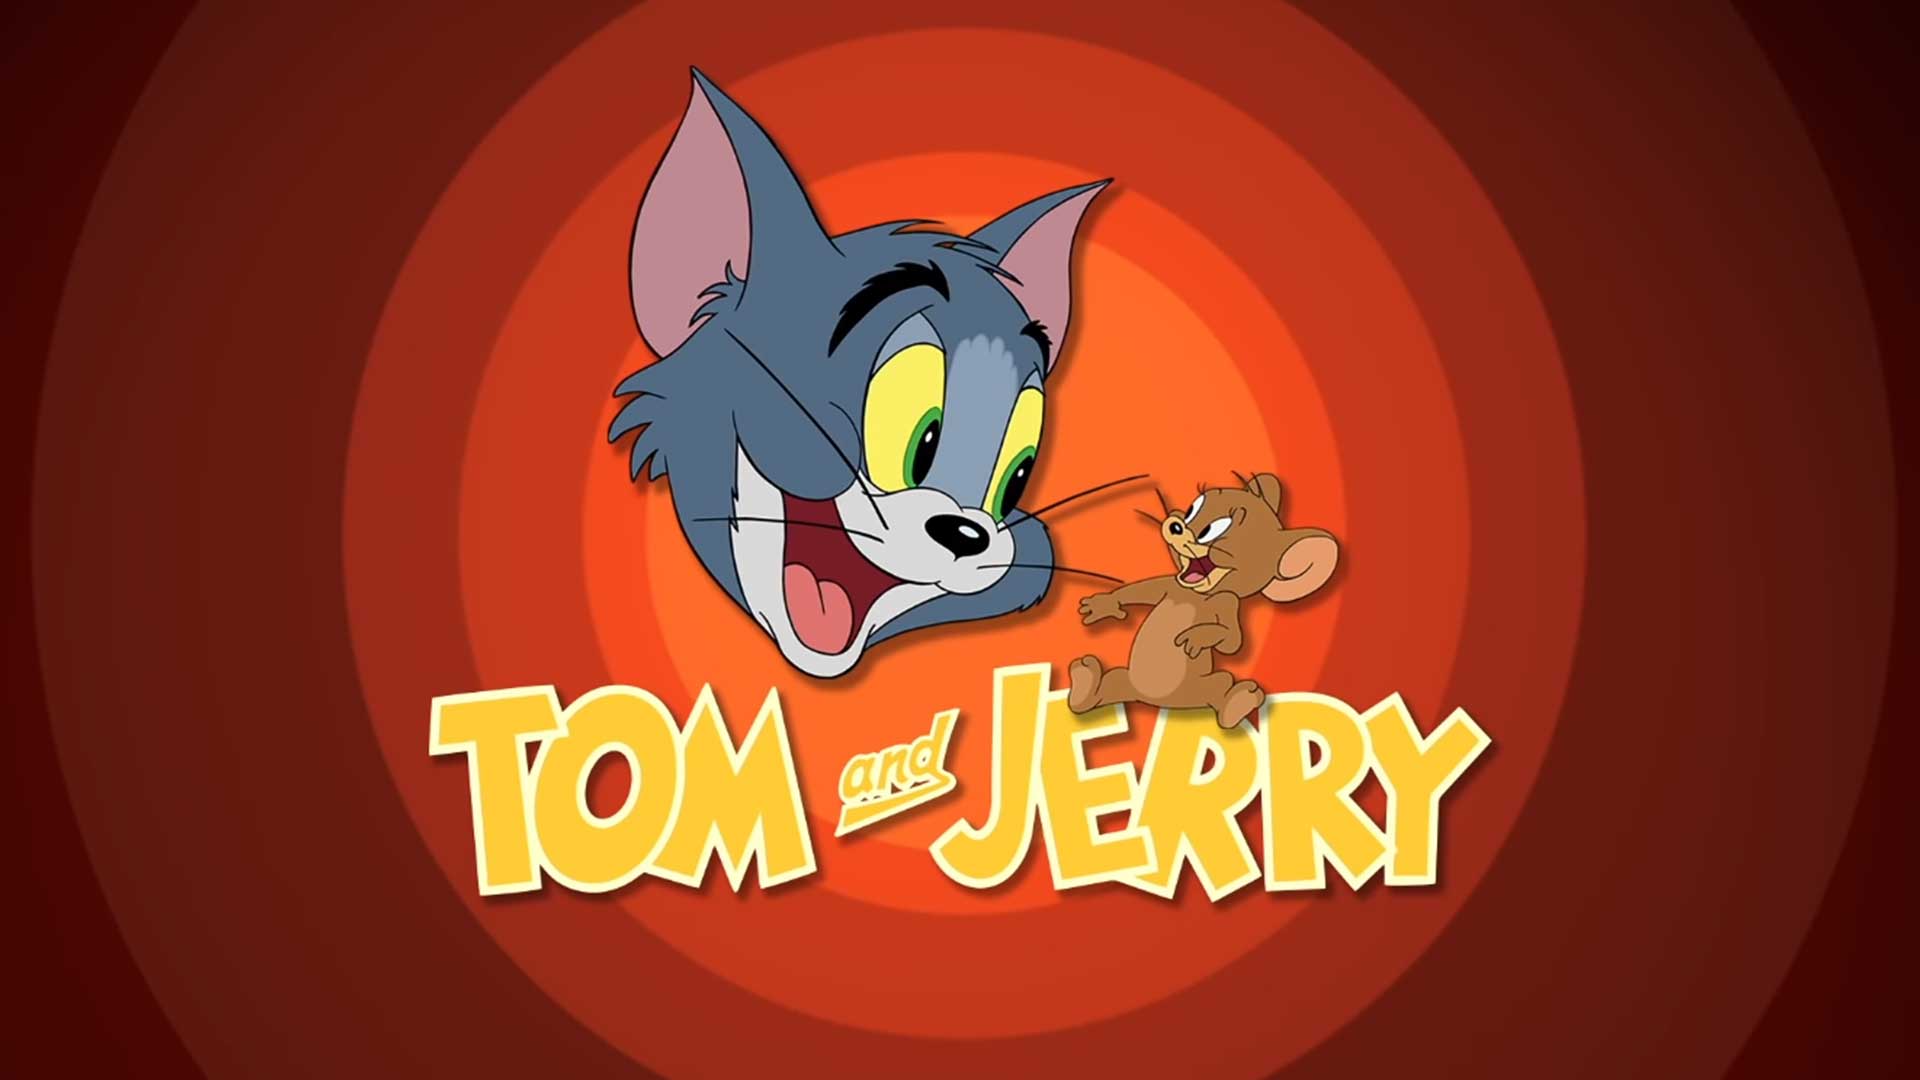 Том и Джерри – 6 серия «Котик и кисуля» / Tom and Jerry